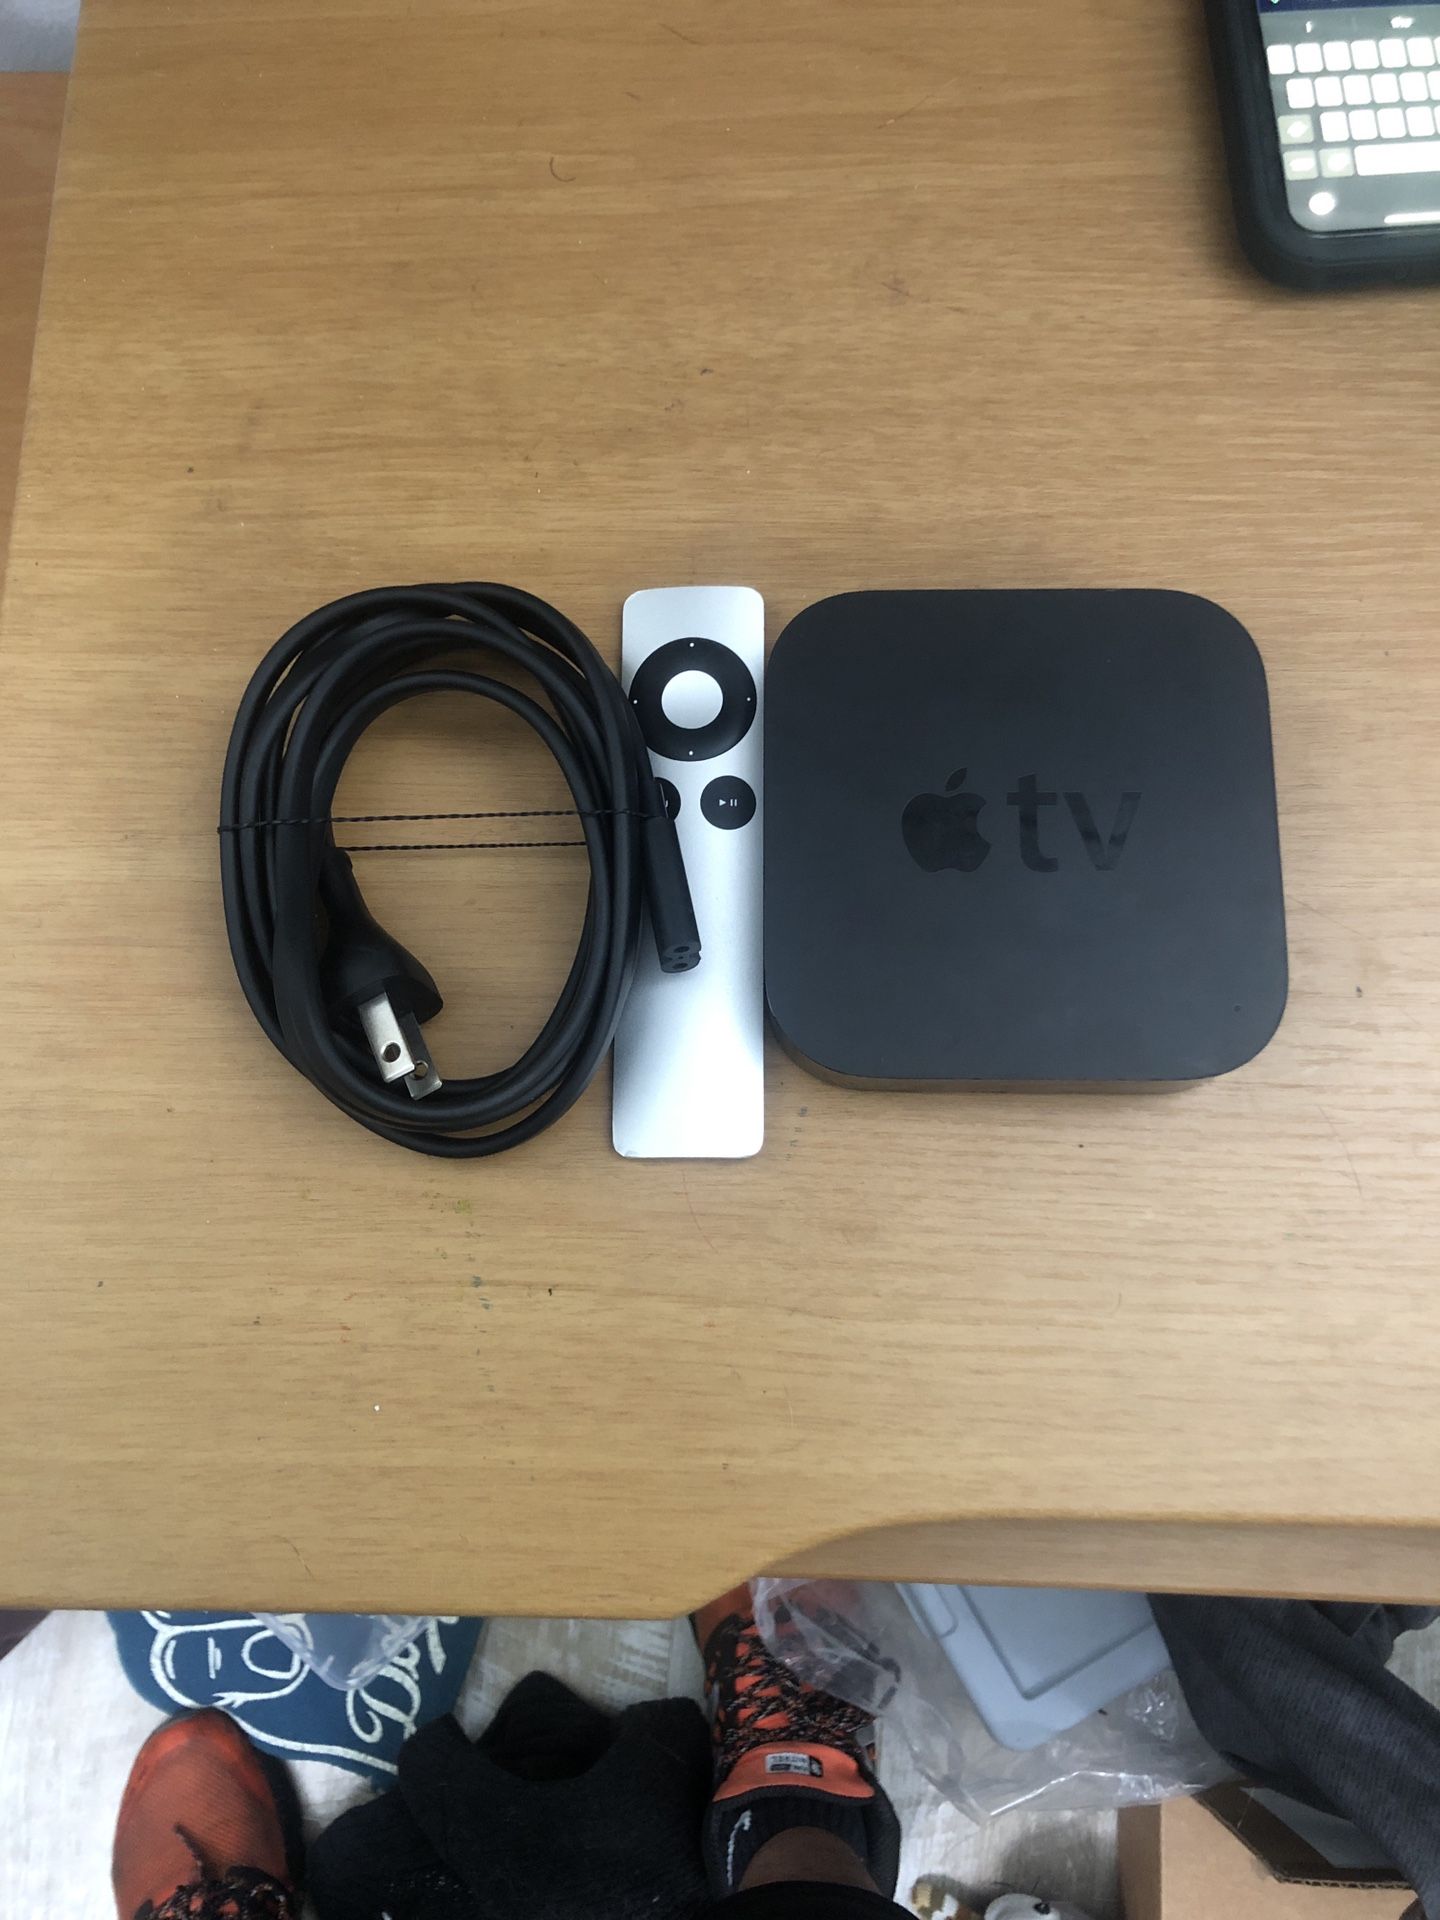 Apple TV 3rd Generation + Remote 